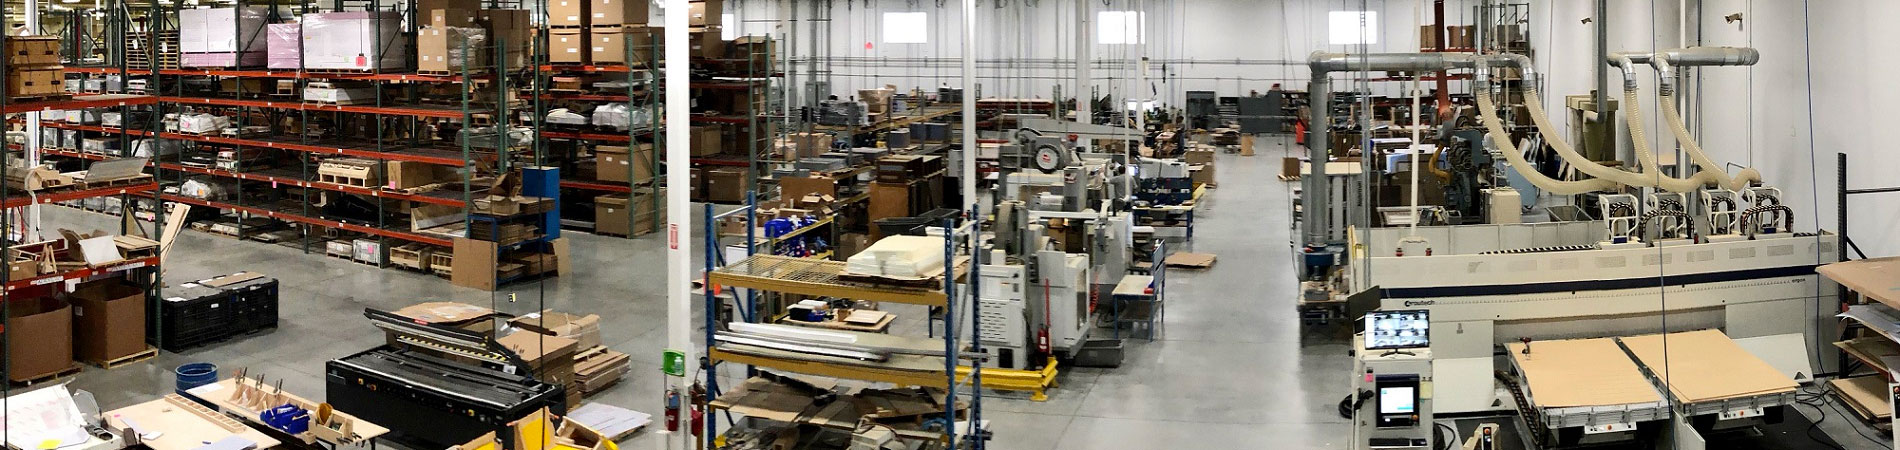 Midland Plastics Warehouse and machines